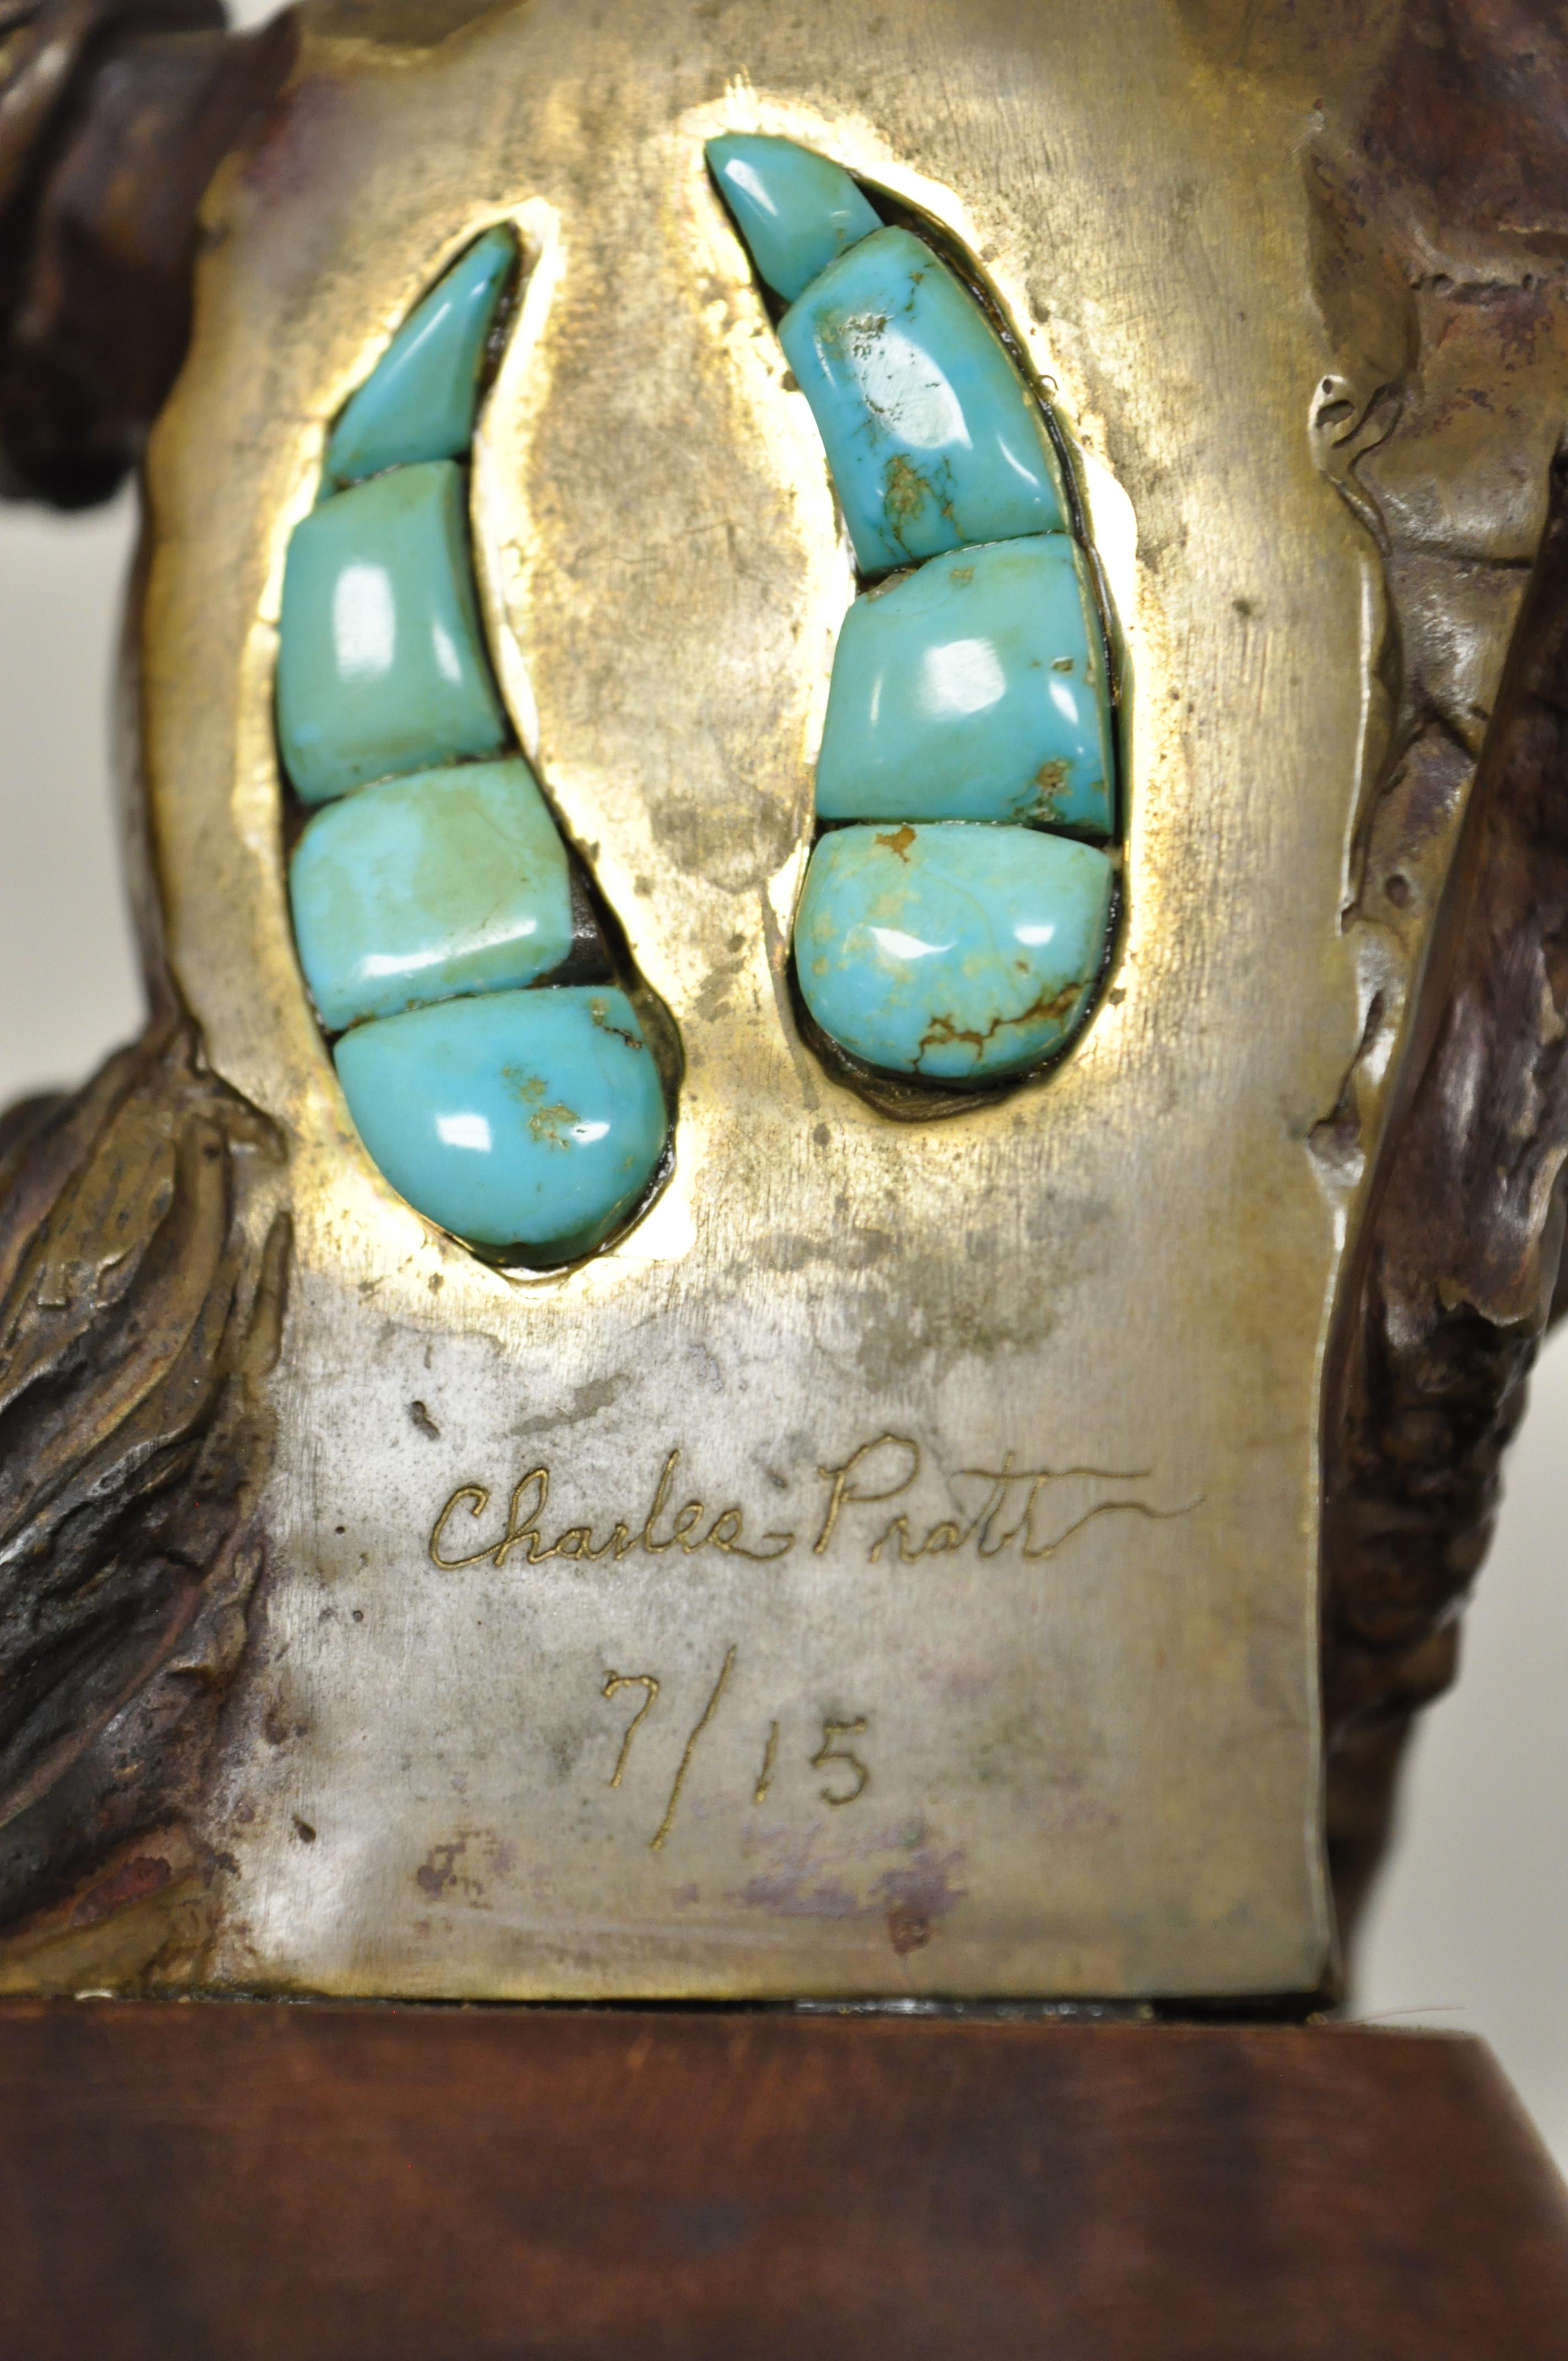 20th Century Charles Pratt Cheyenne Arapaho Bronze Indian Chief Figurine Sculpture Statue For Sale